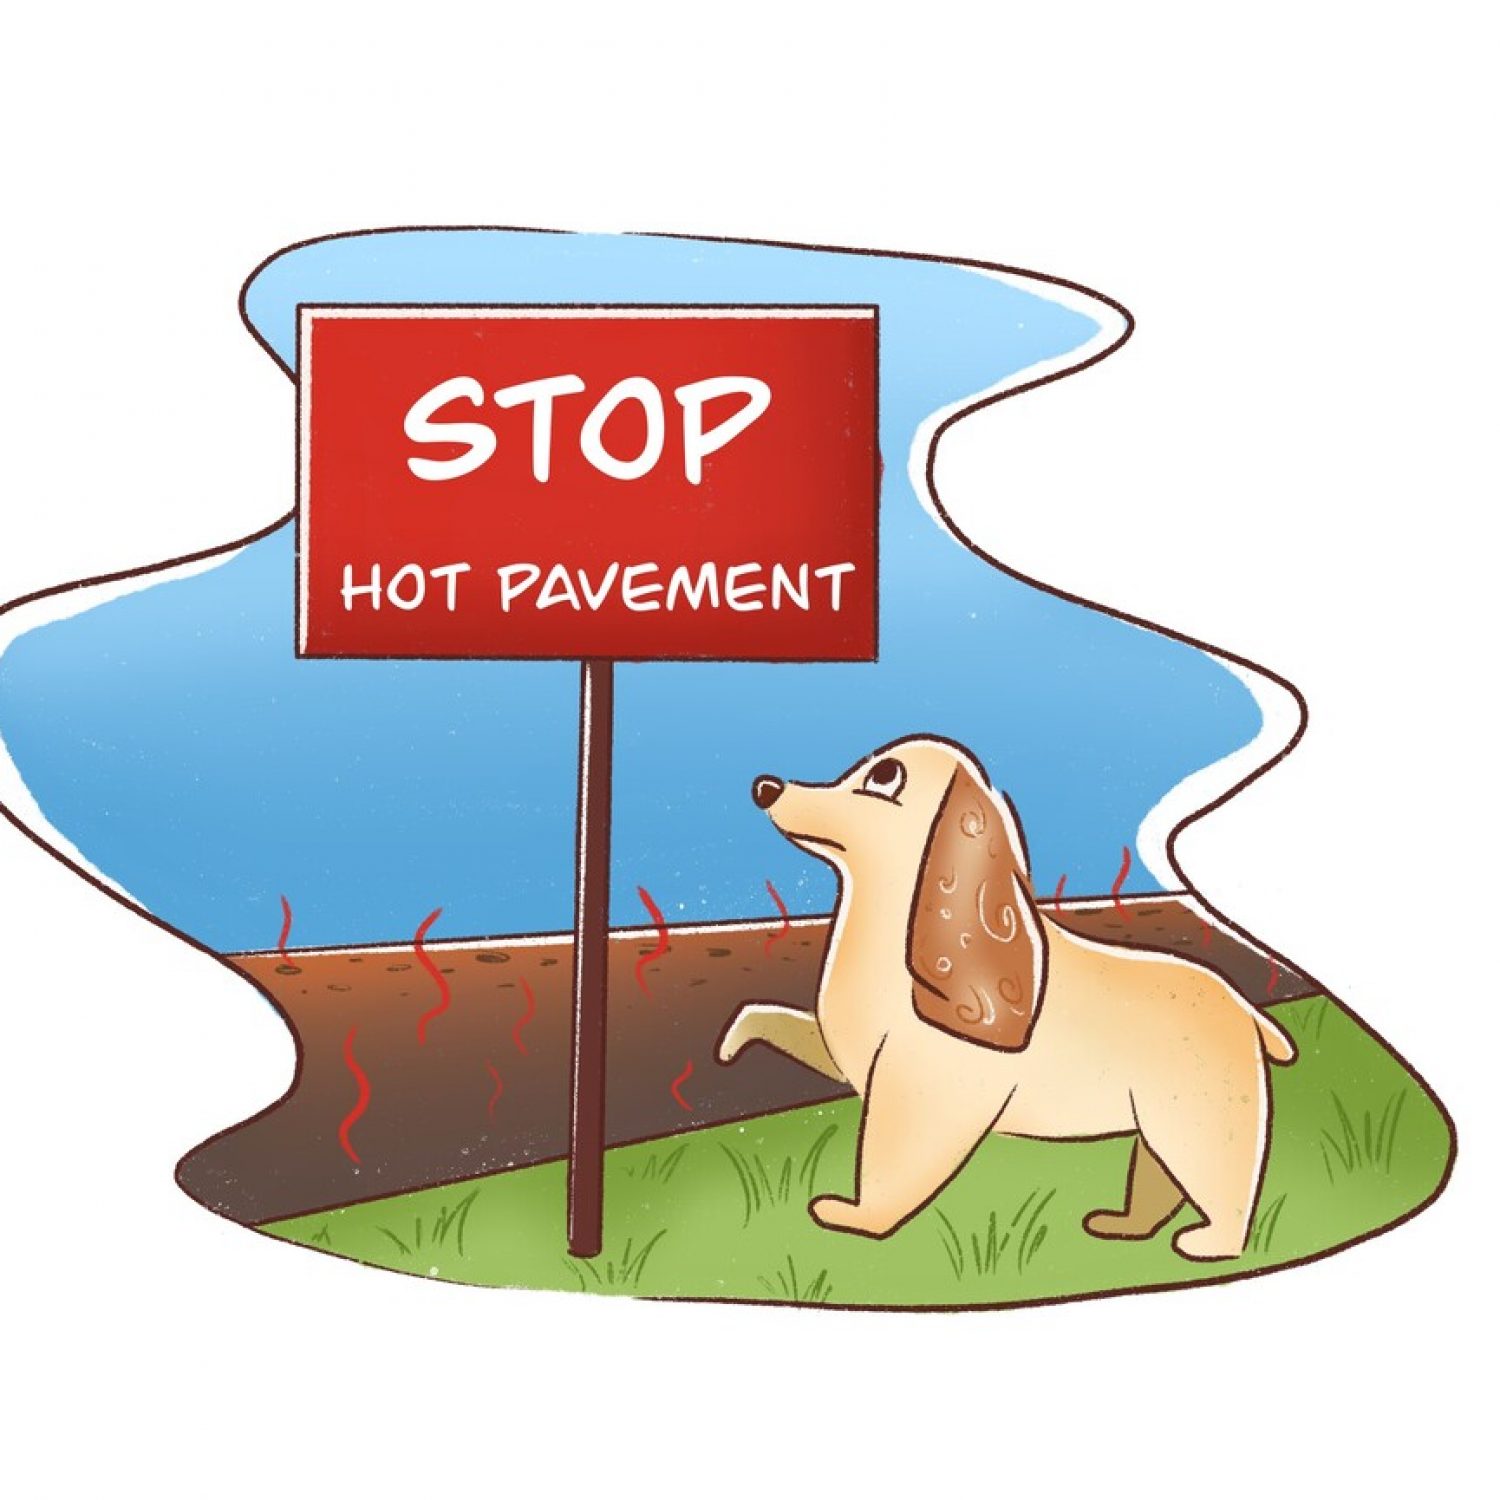 How bad is walking dog on hot pavement like asphalt?